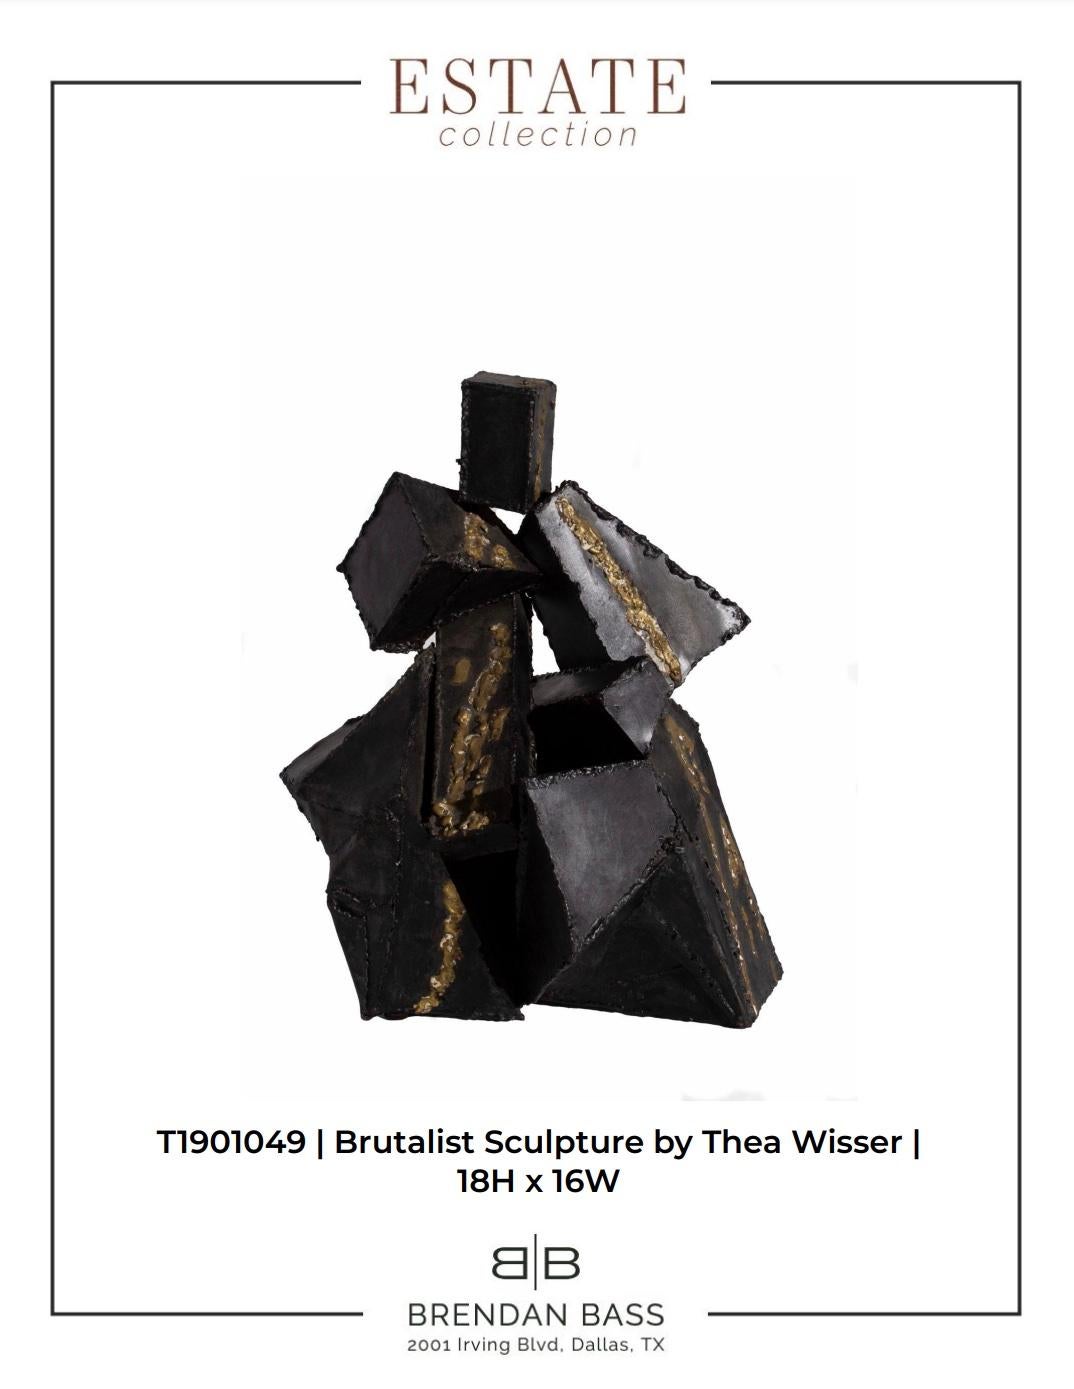 Modern Brutalist Abstract Sculpture by Thea Wisser